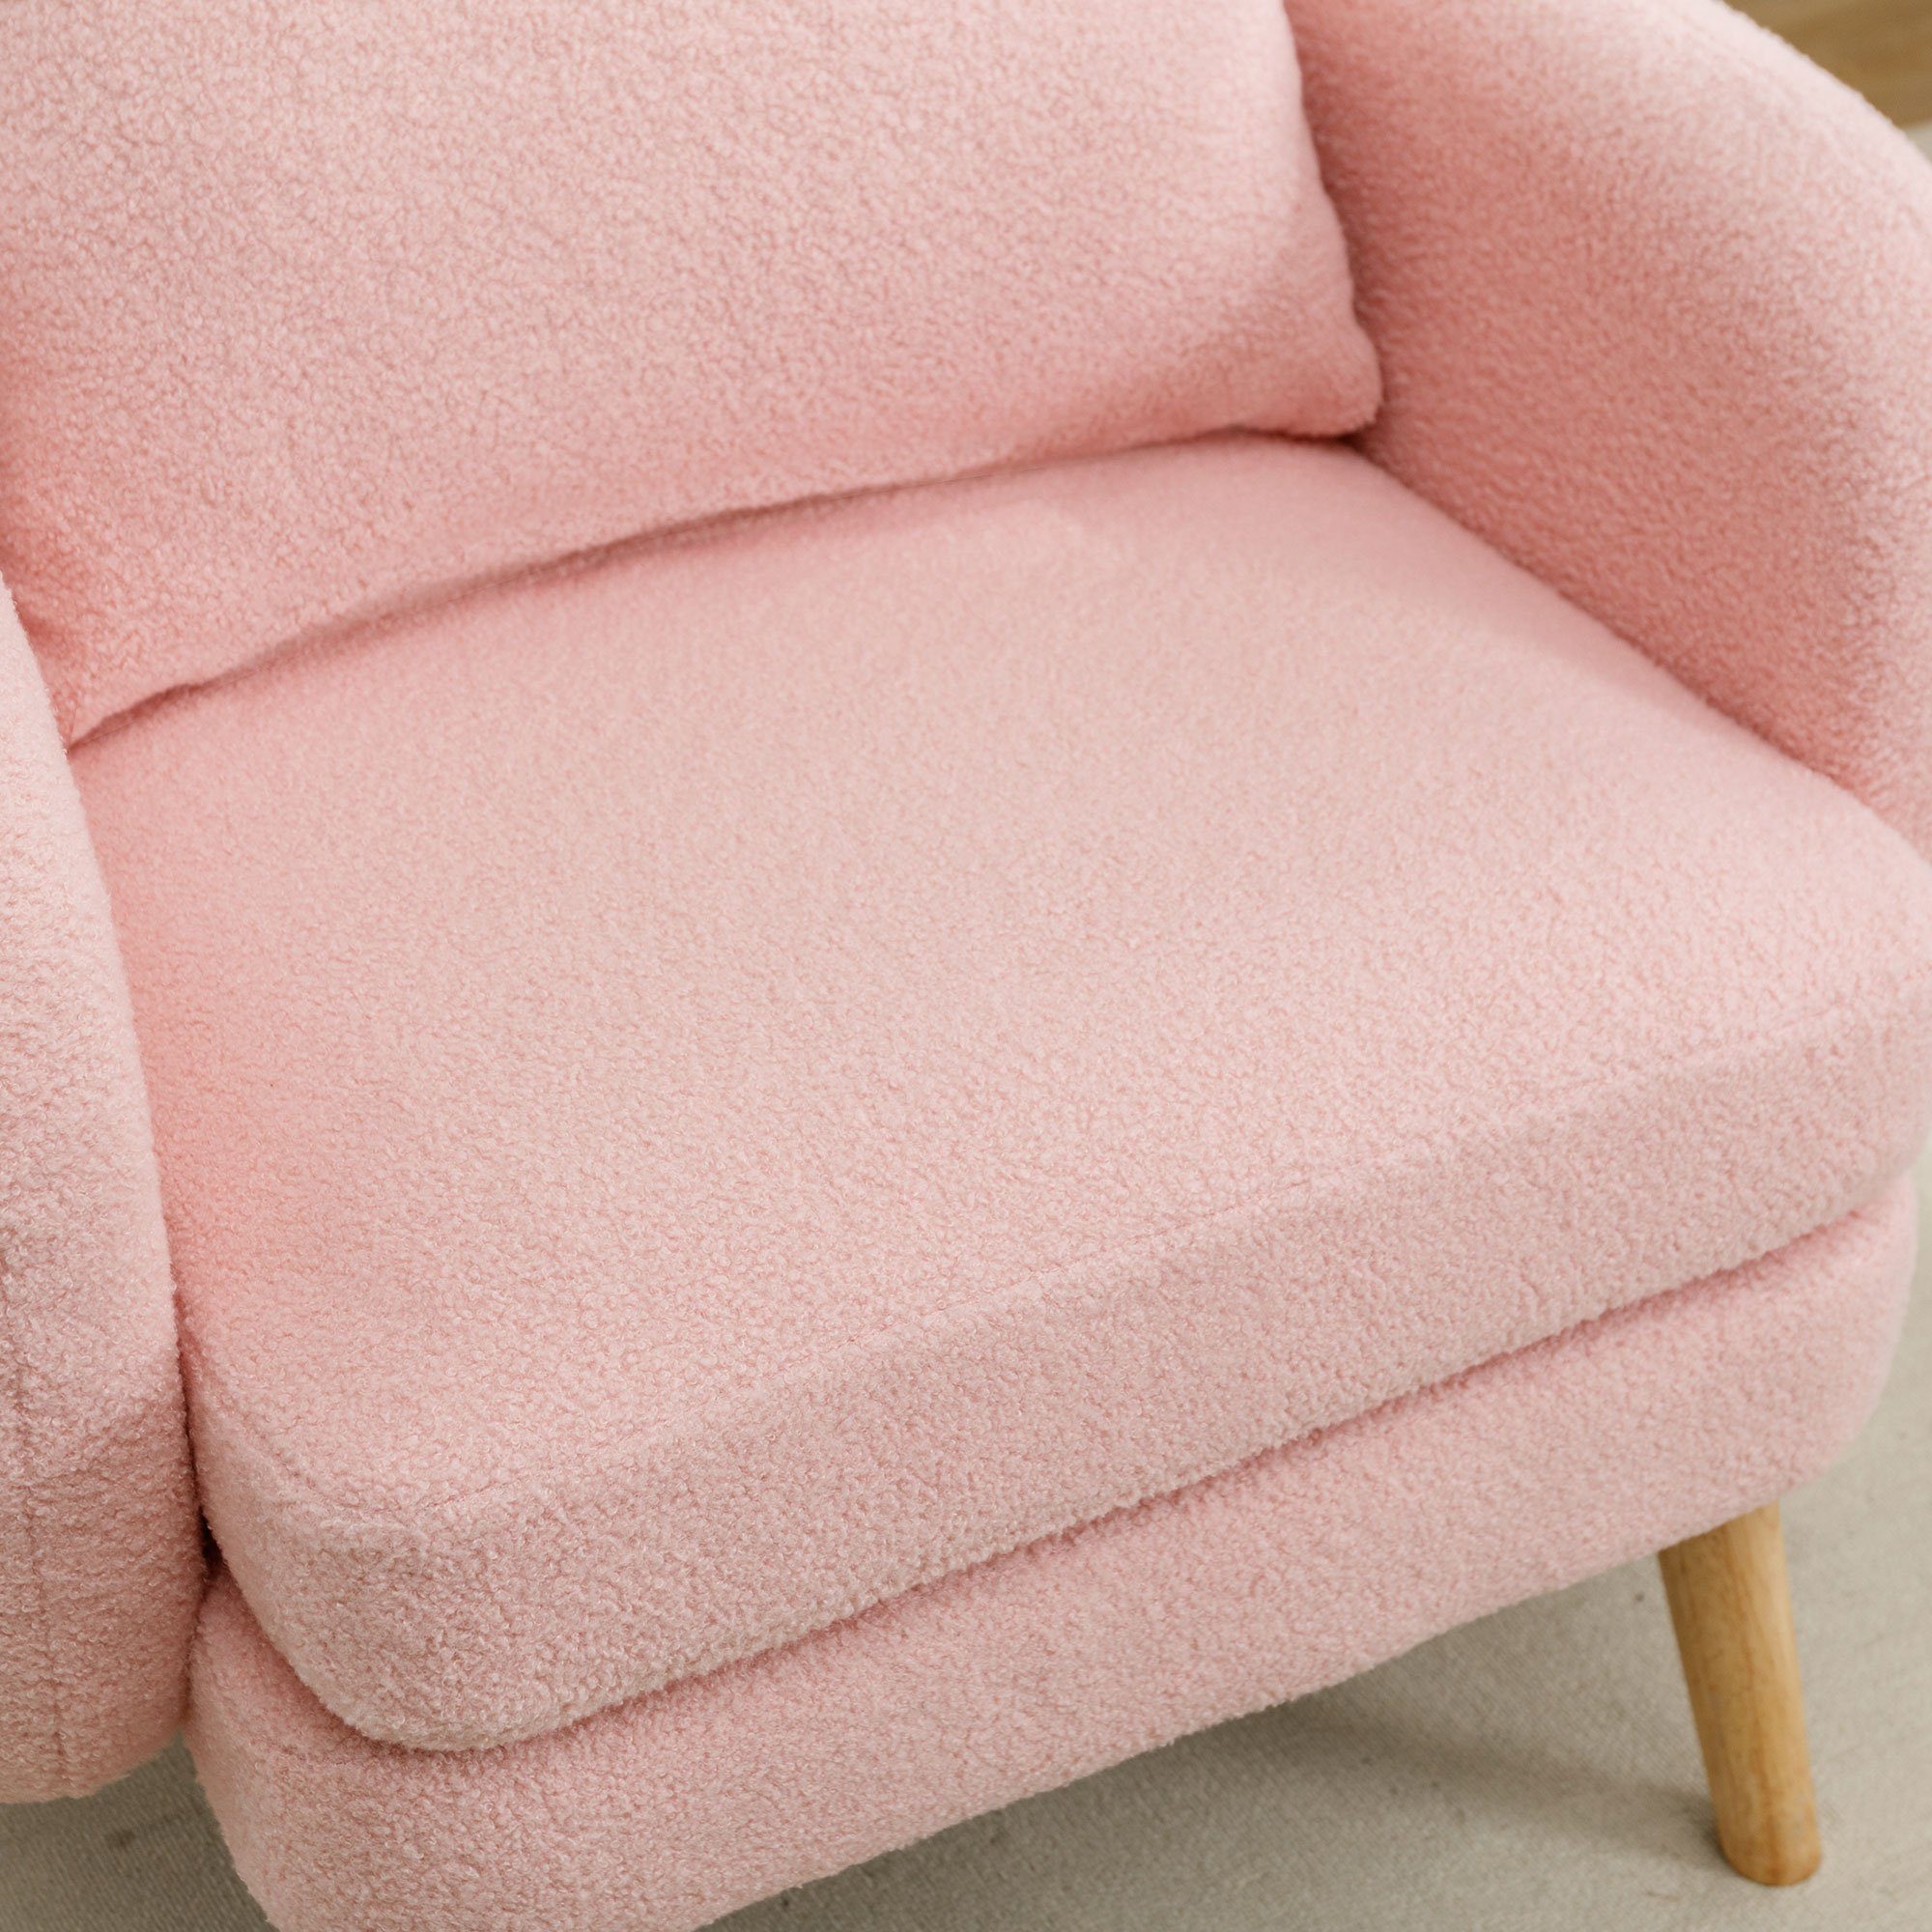 REDOM Sessel Polstersessel Loungesessel, (Moderner, Sessel mit schlichter dickem Kissen, mit Armlehnensessel Beine aus rosa Massivholz Kissen Teddy-Samtstuhl), extra